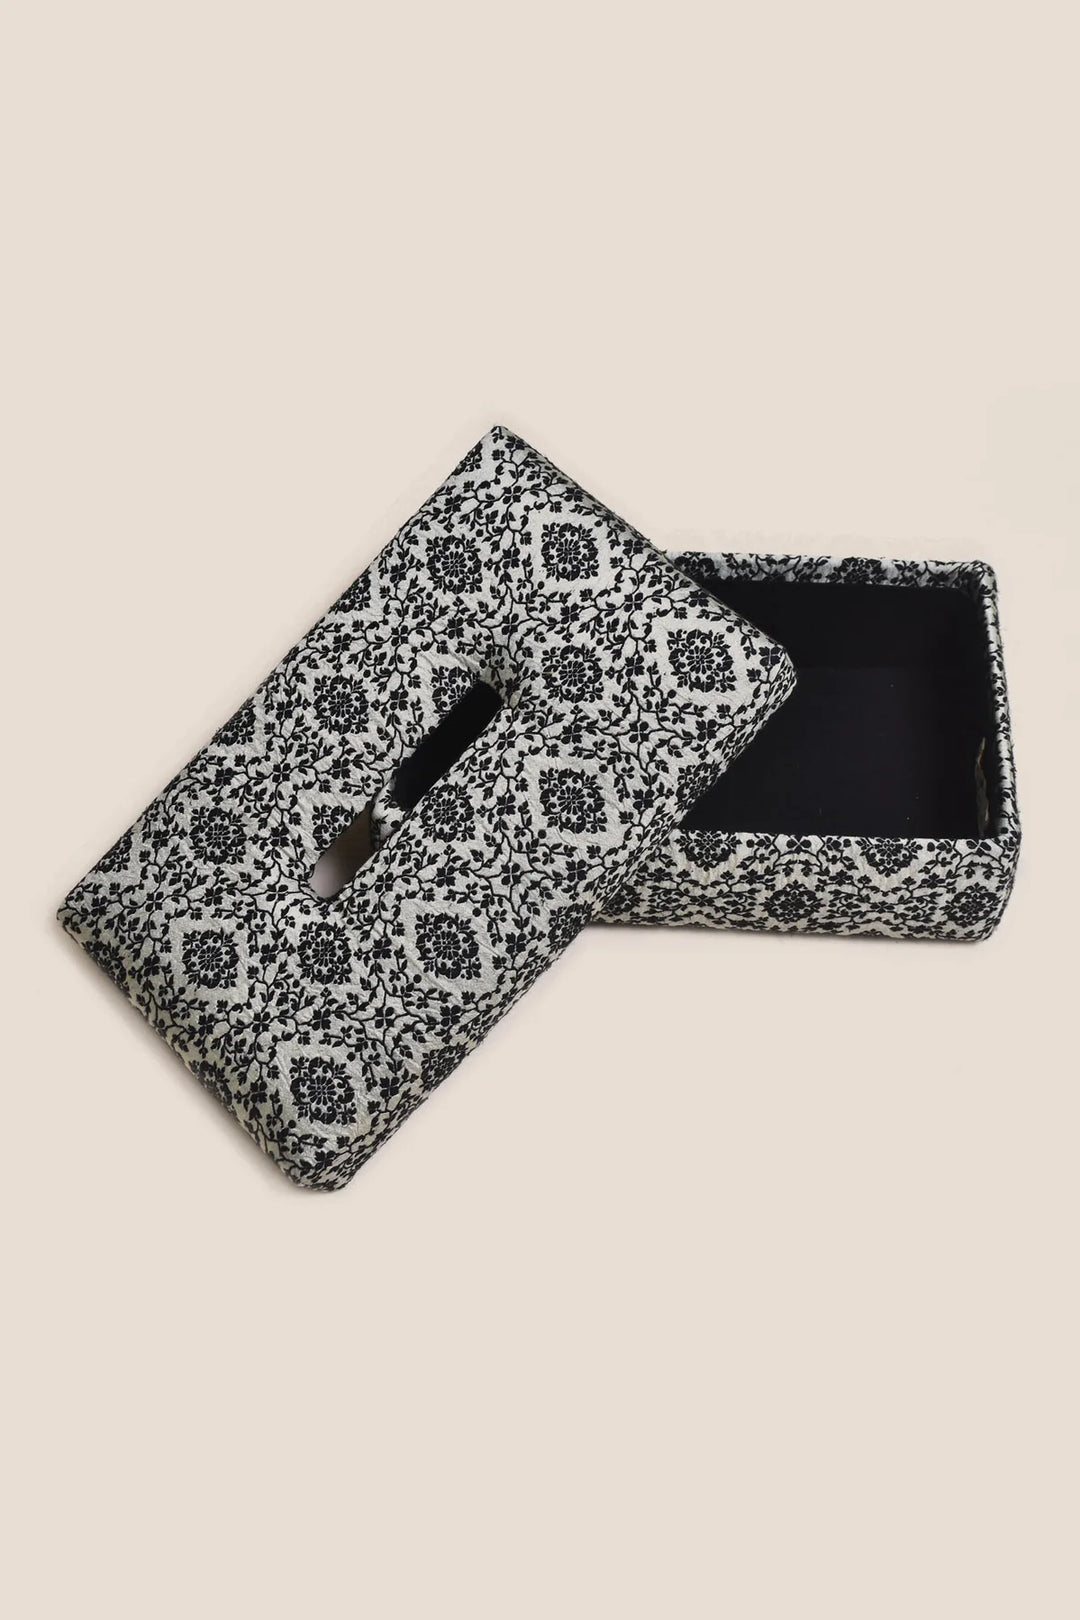 Silk and Cotton Tissue Box Cover | Oculus Handmade Tissue Box - White & Black